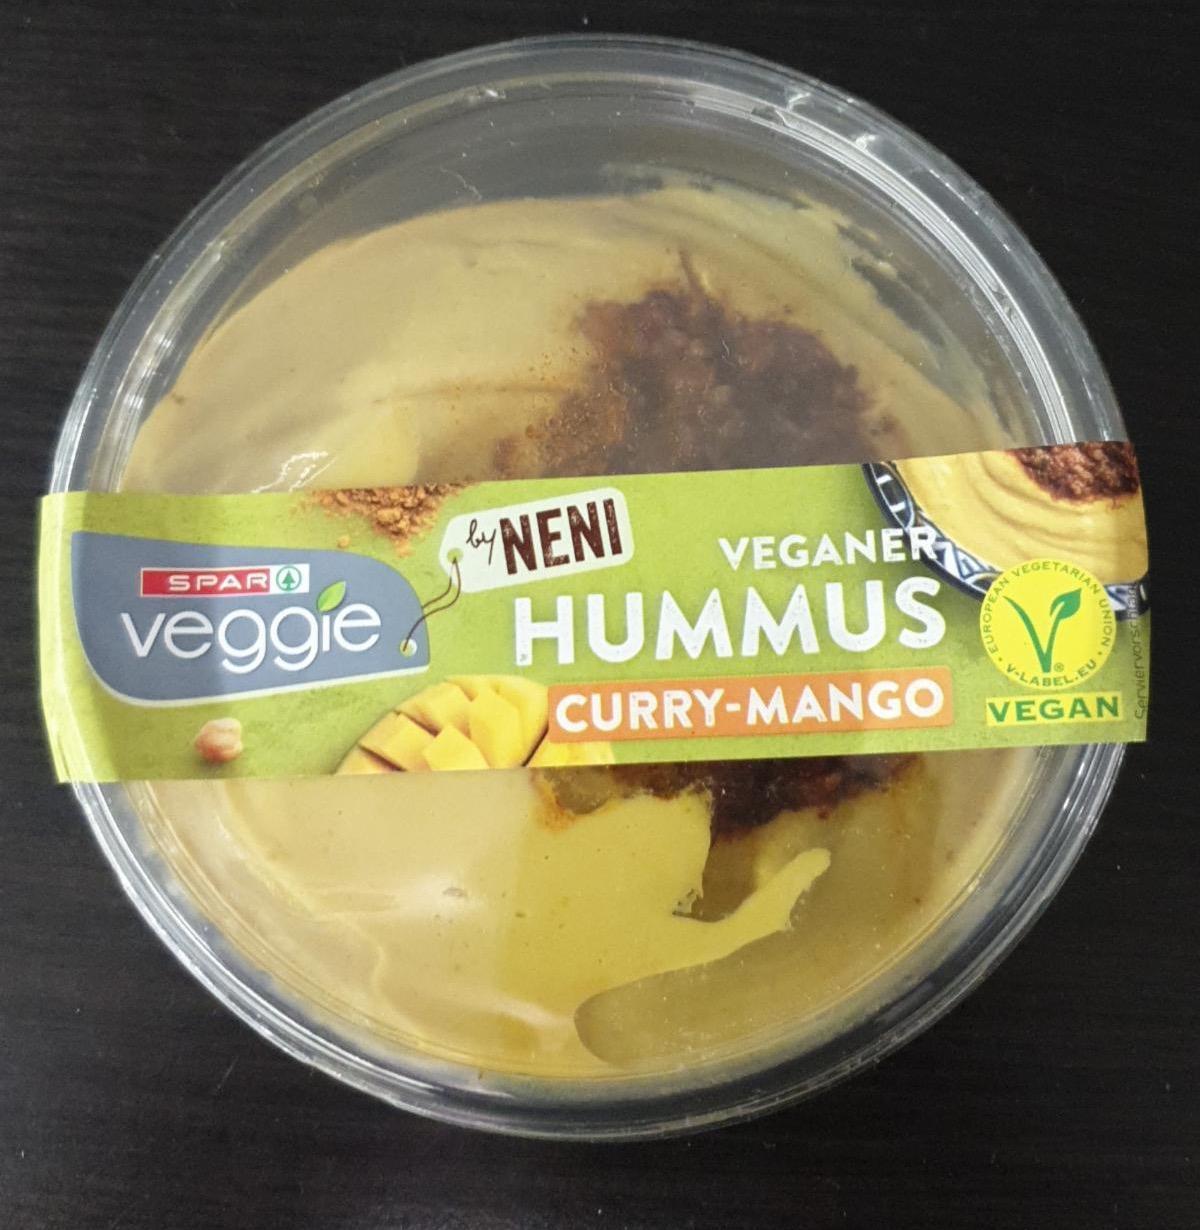 Képek - Hummus curry-mango Spar veggie